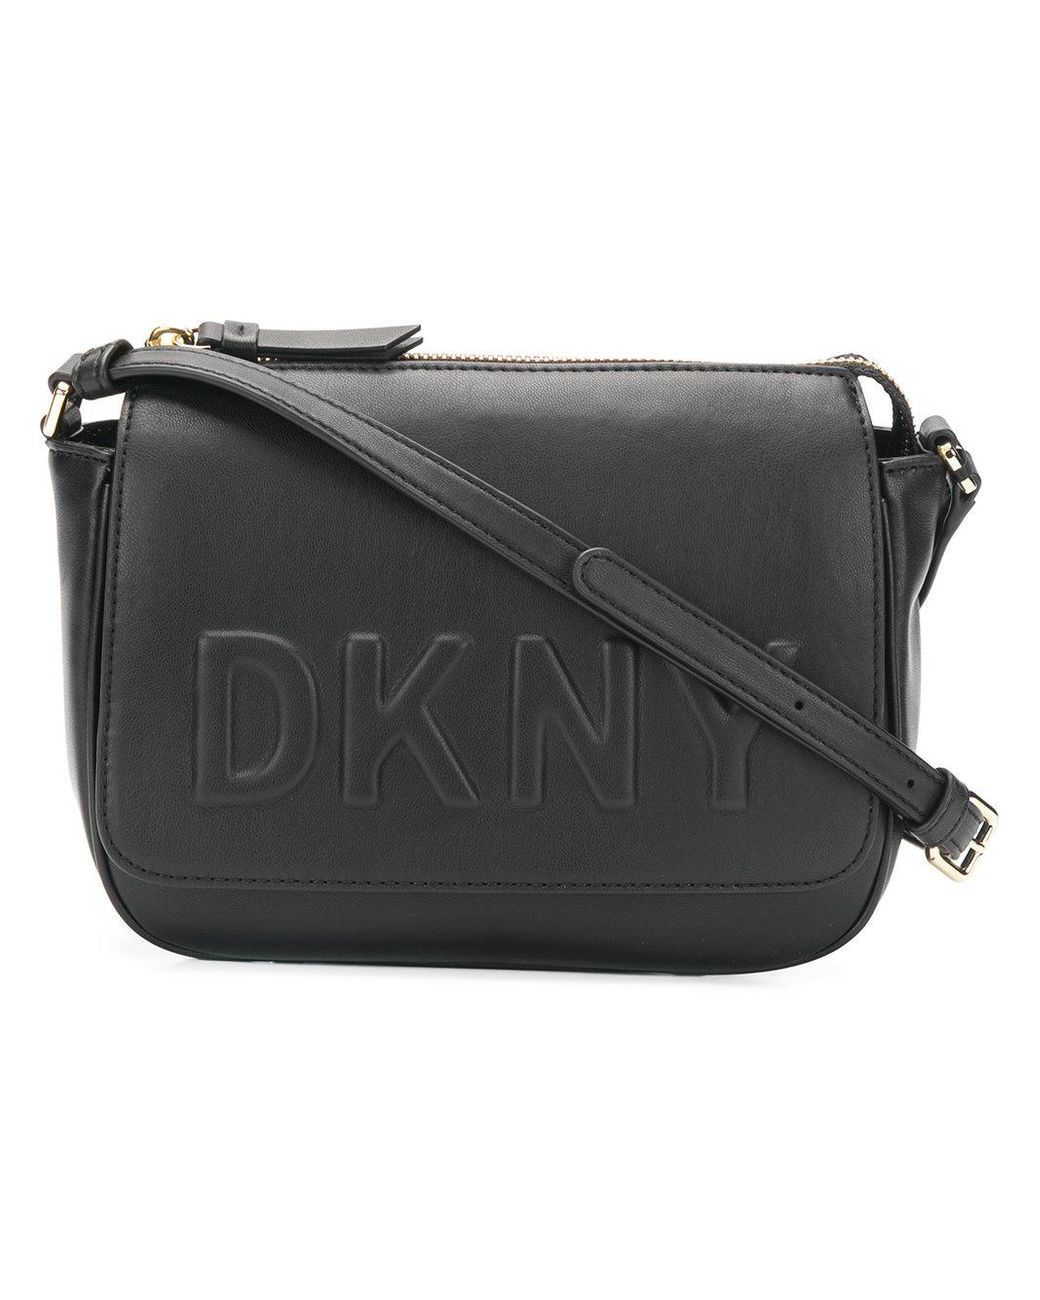 DKNY Tilly Crossbody Bag With Logo in Black | Lyst